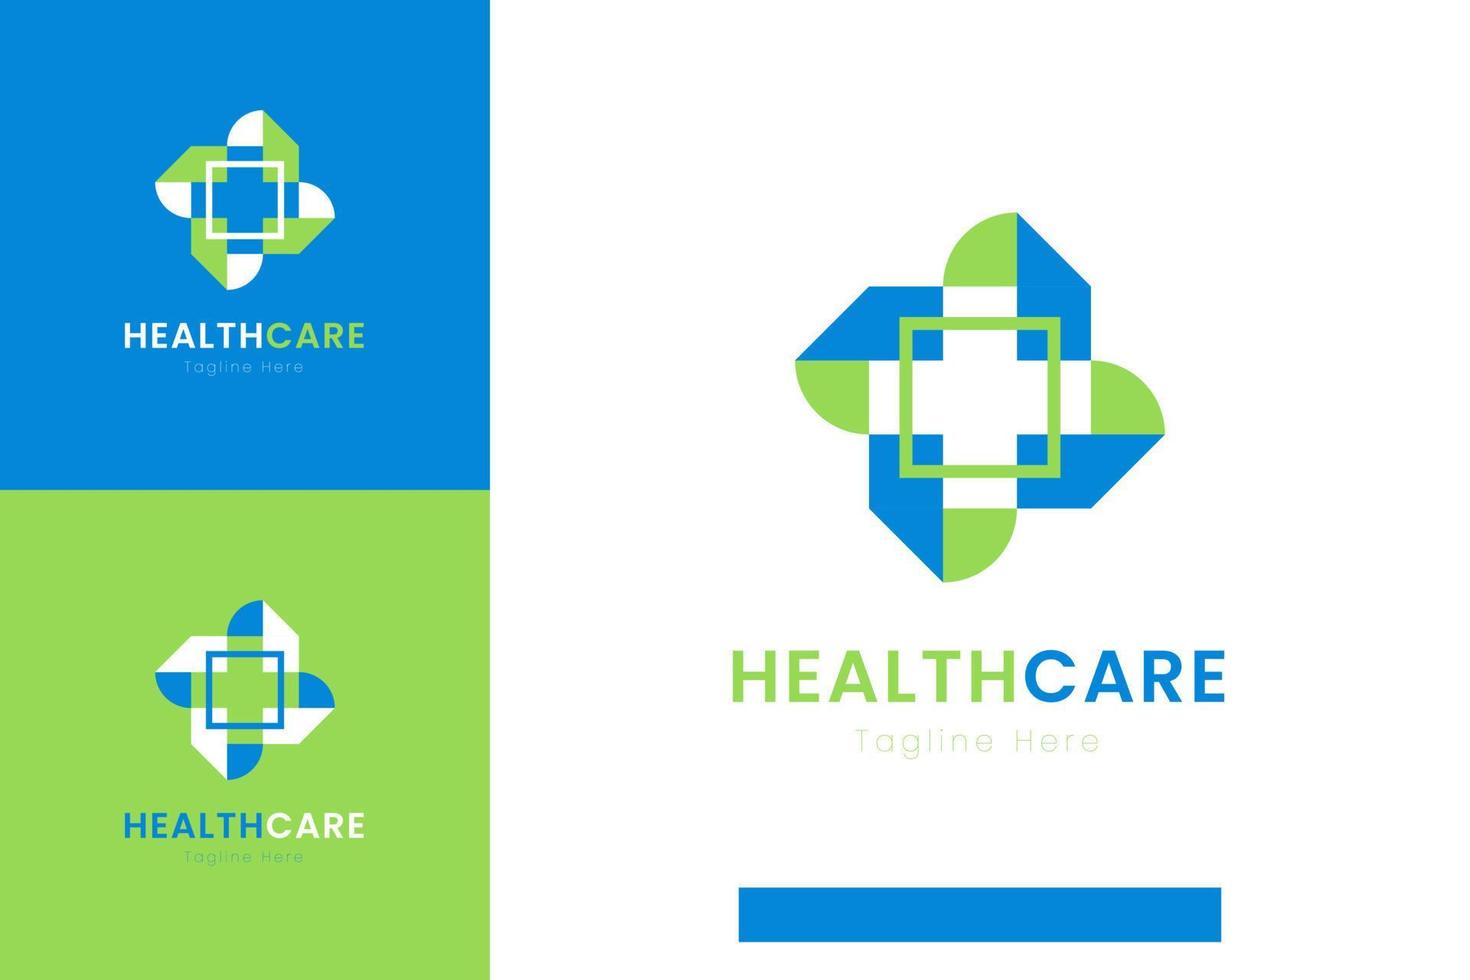 conjunto de modelos de design de logotipo de saúde médica com estilos de cores diferentes vetor